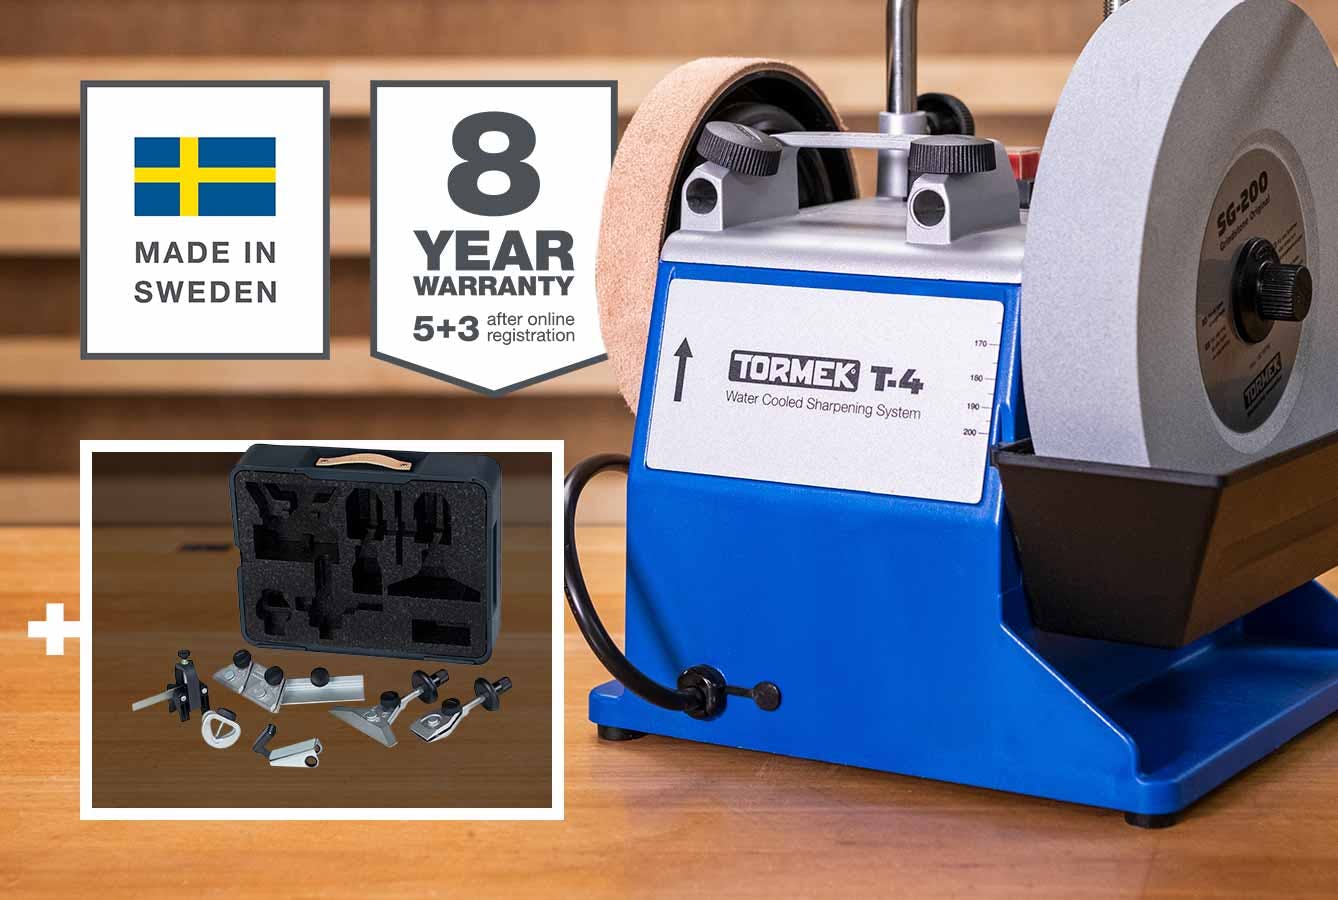 Made in Sweden - 8 Year Warranty